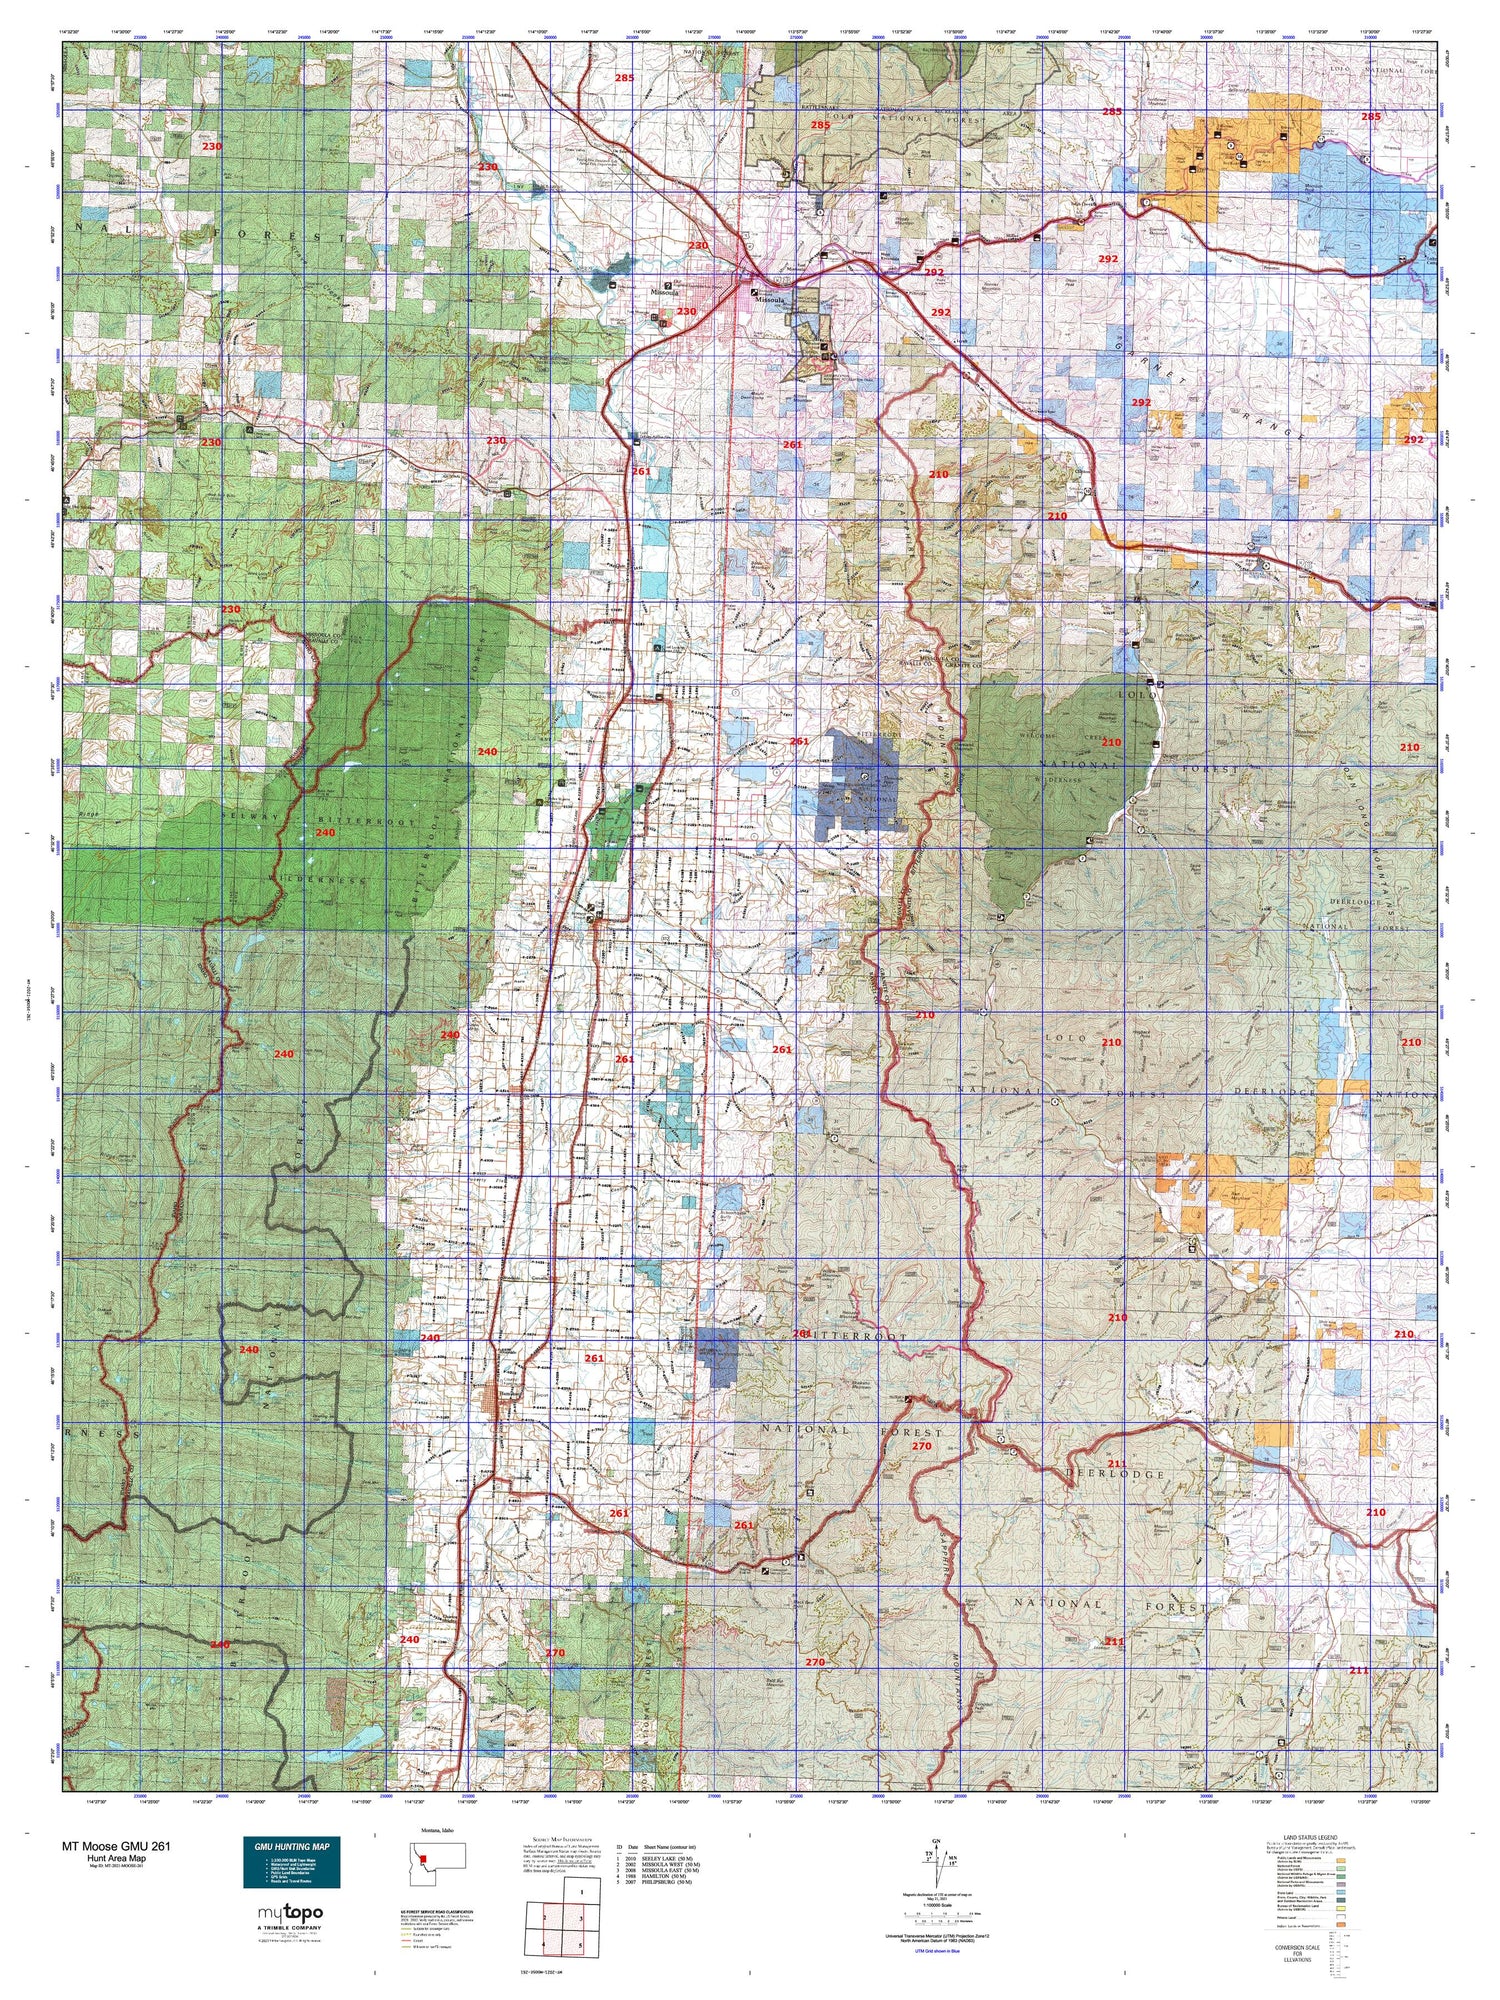 Montana Moose GMU 261 Map Image